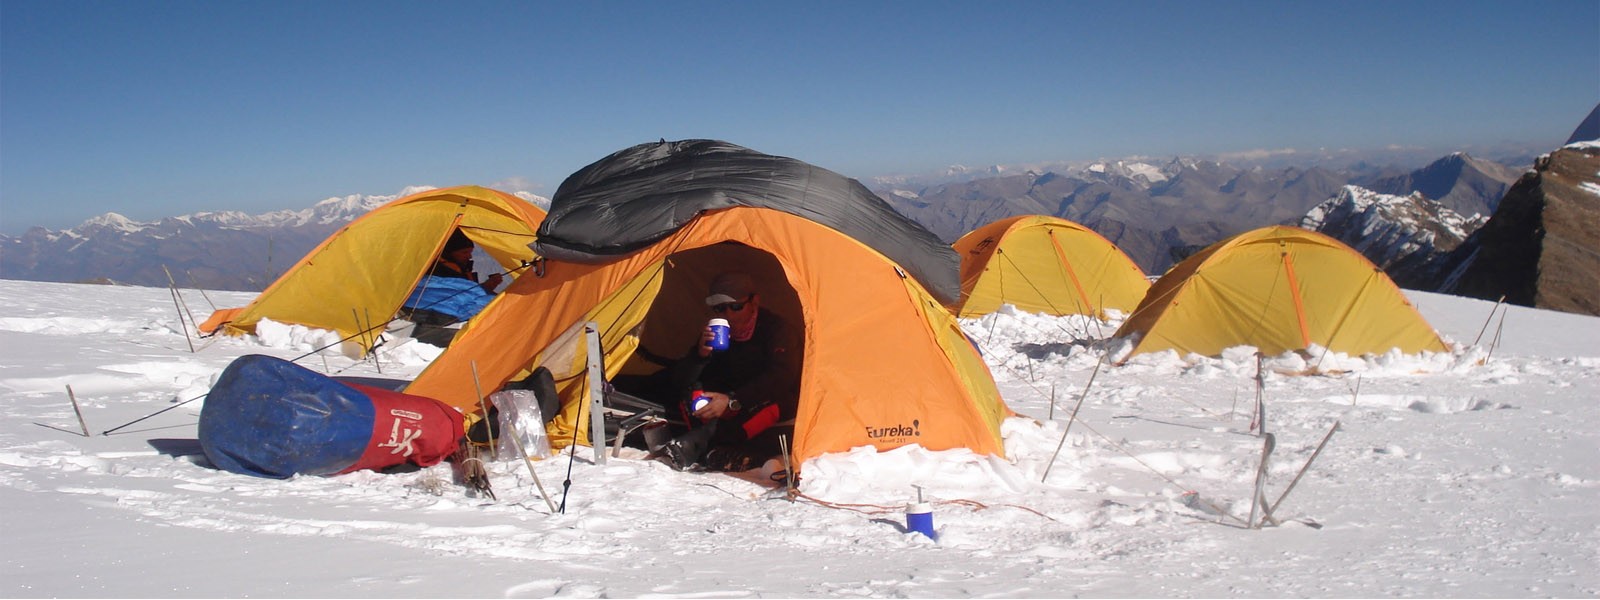 Mt. Putha Hiunchuli Expedition in Dhaulagiri Himalayan Range